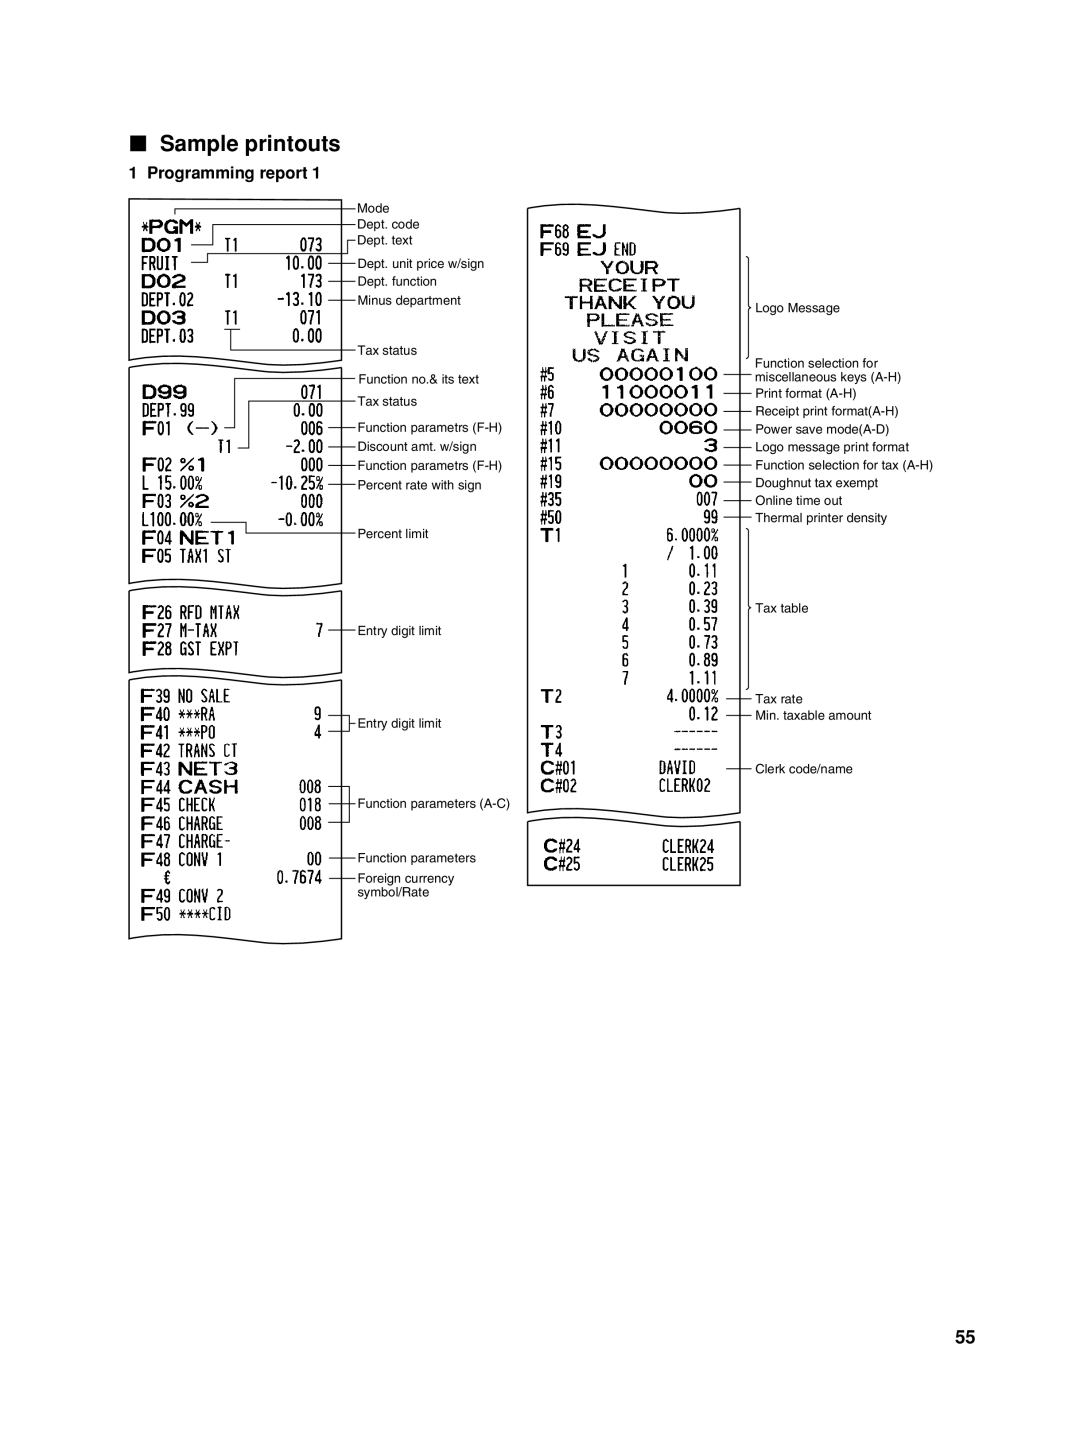 Sharp TINSZ2600RCZZ instruction manual Sample printouts, Programming report 